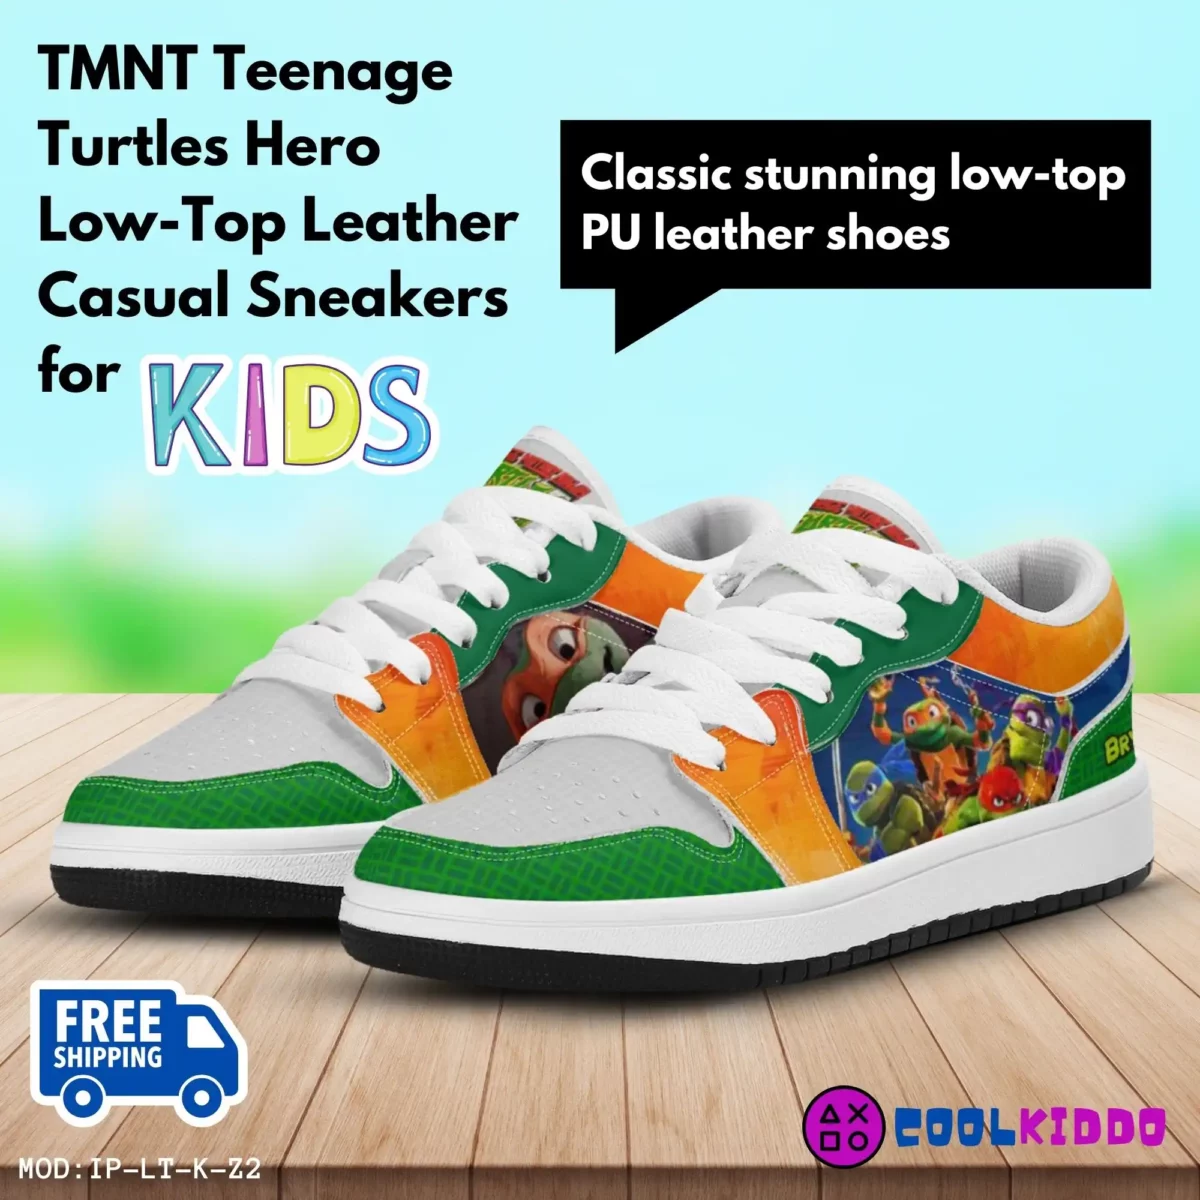 TMNT Teenage Mutant Ninja Turtles Animated Series Inspired Low-Top Casual Shoes Cool Kiddo 10